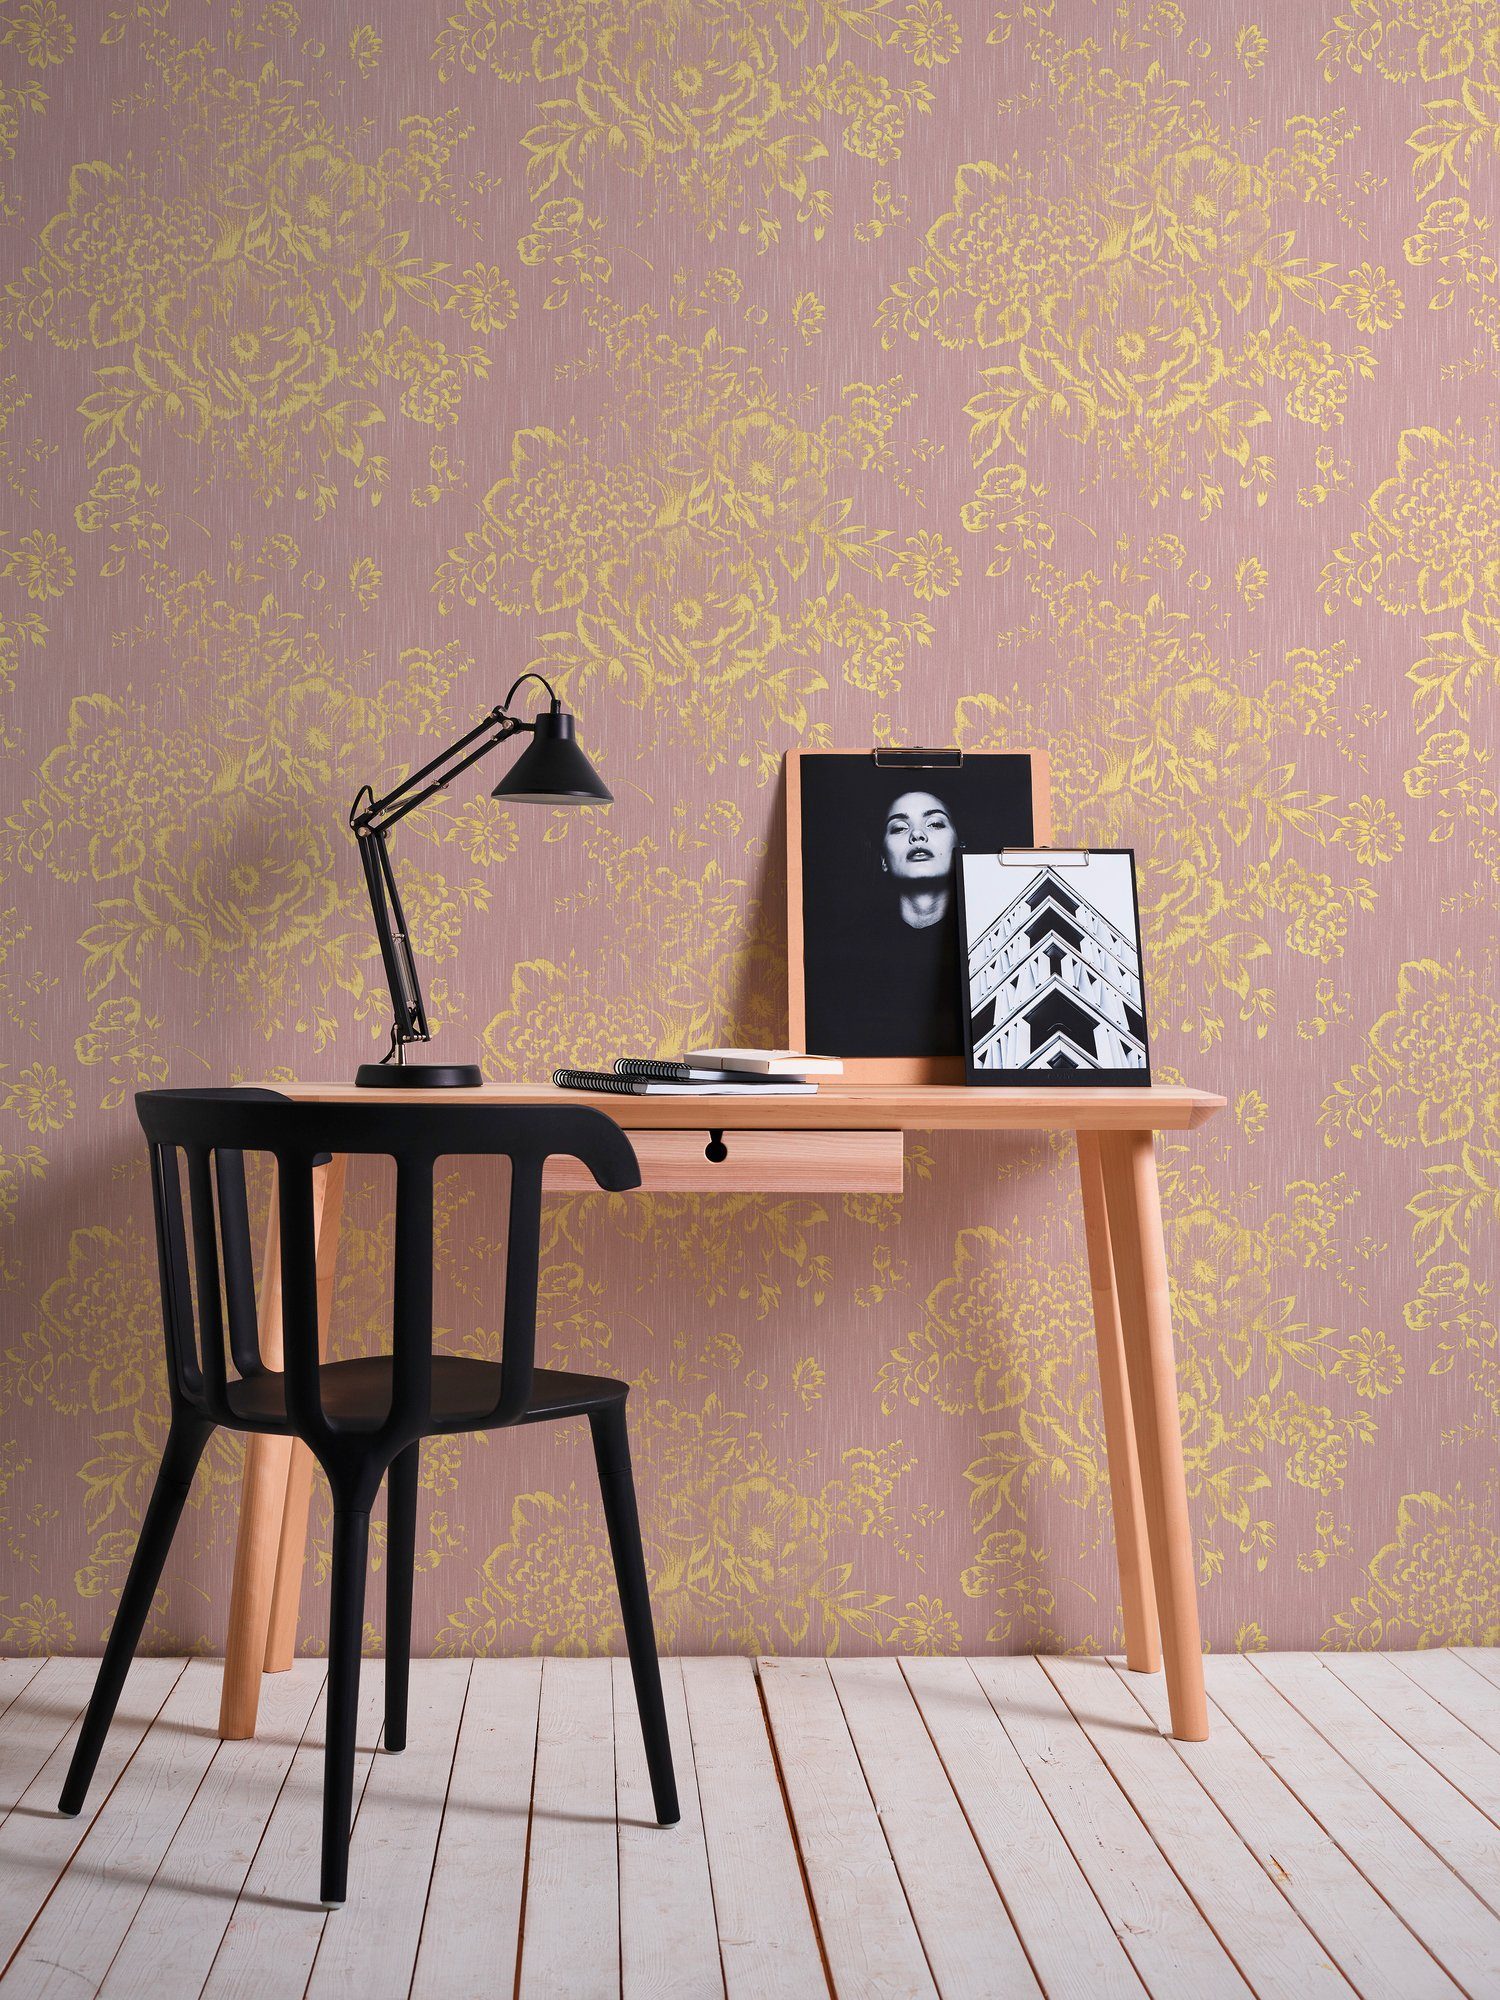 Création Blumen gold/rosa Paper samtig, Textiltapete Barocktapete A.S. matt, glänzend, Tapete Architects Silk, Metallic floral,